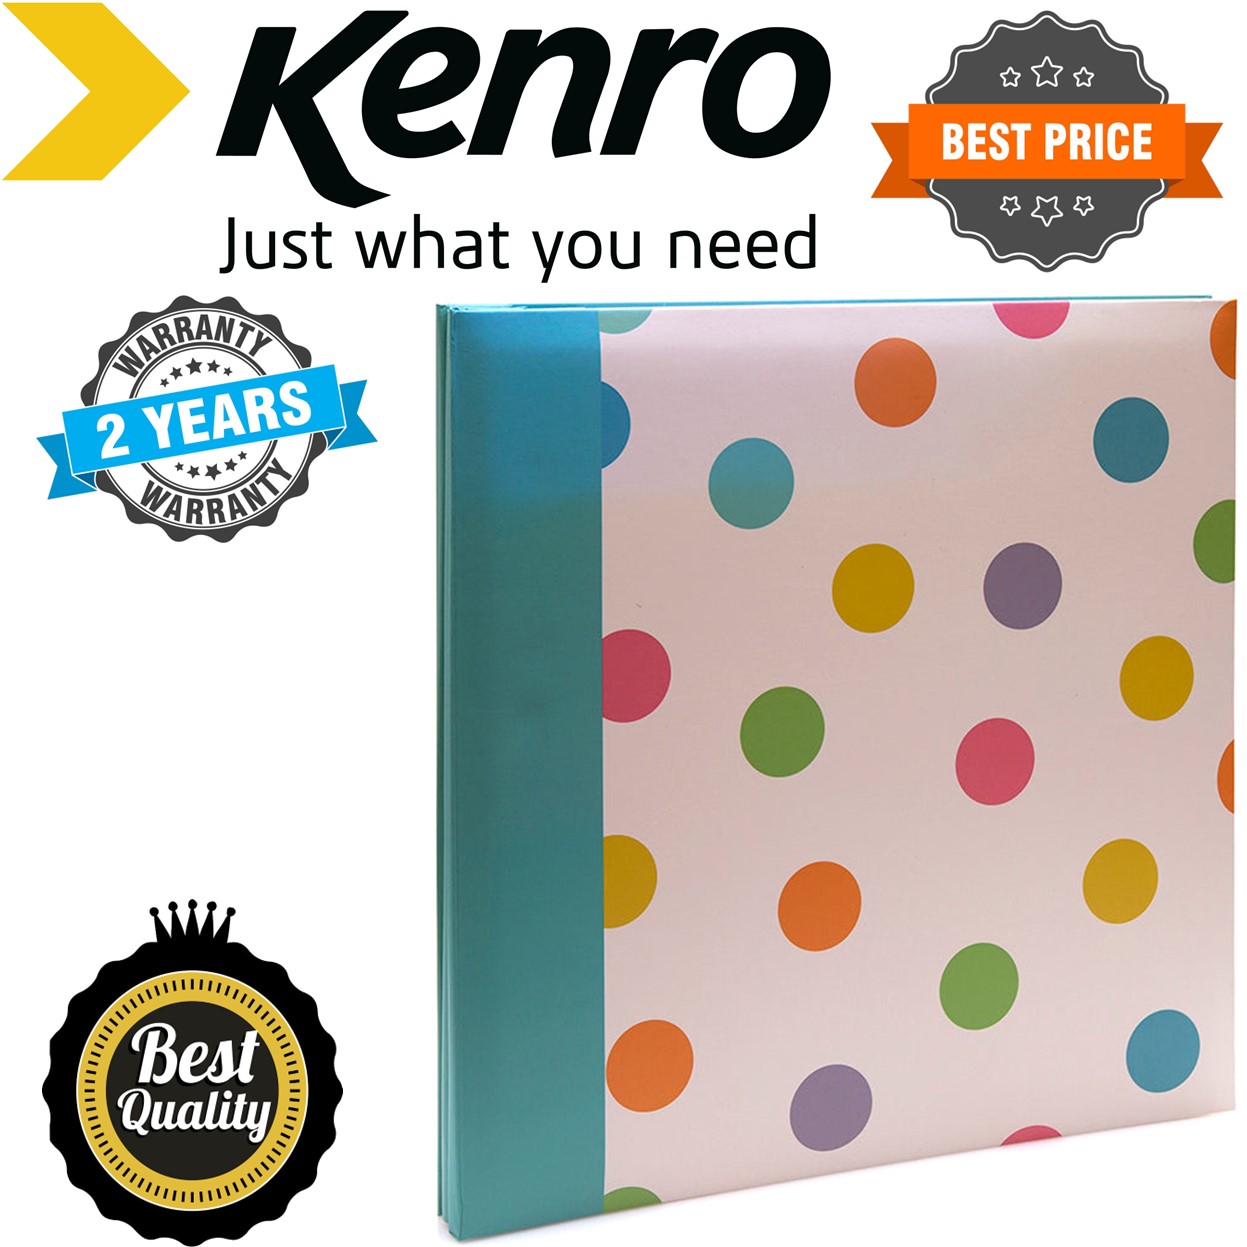 Kenro 26x32.5cm Candy Mini Album Spots 40 Photos